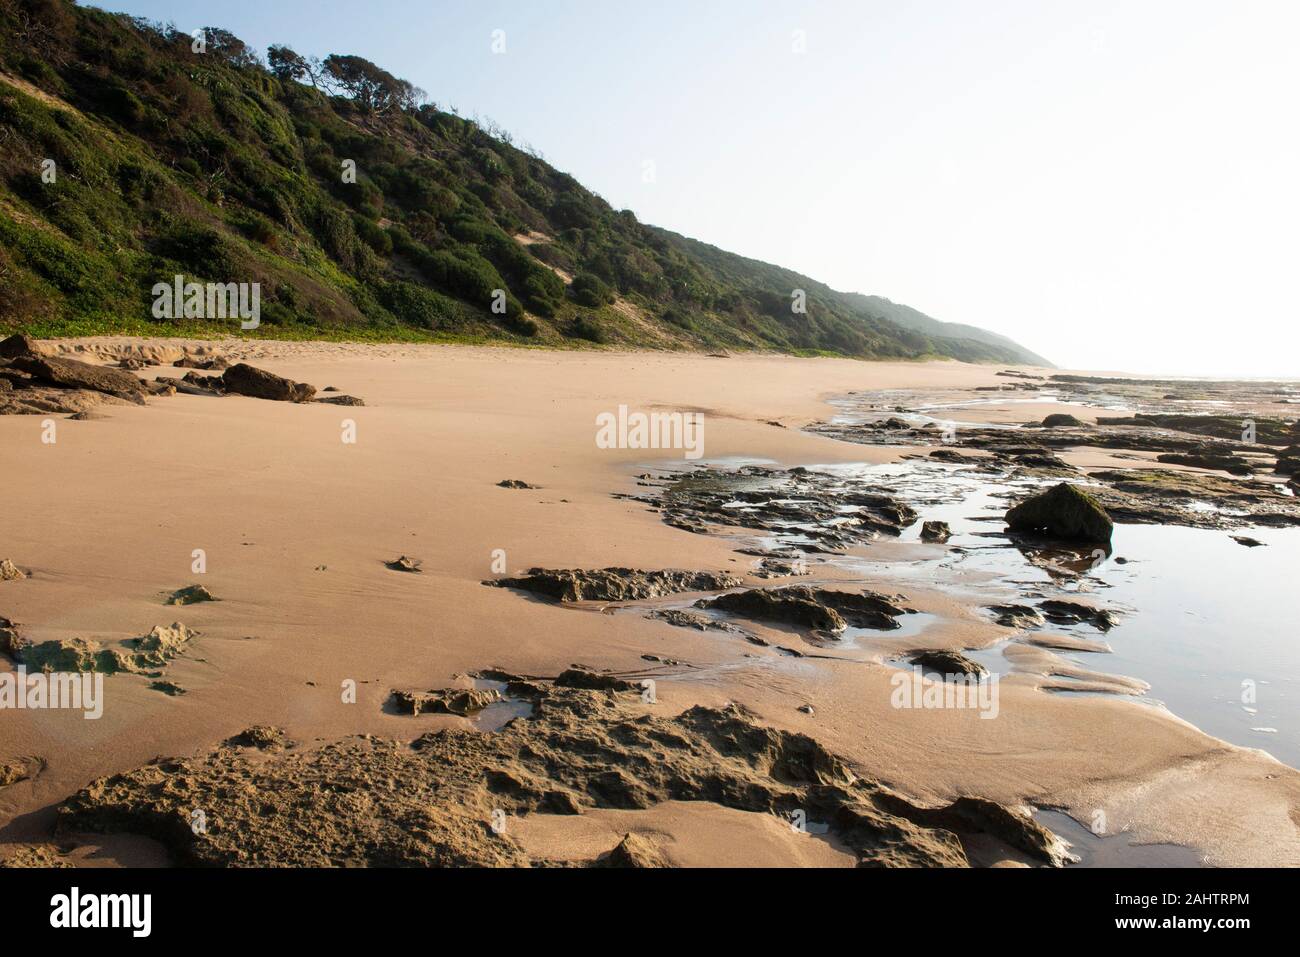 Mission Rocks beach, Cape Vidal, iSimangaliso Wetland Park, South Africa Stock Photo